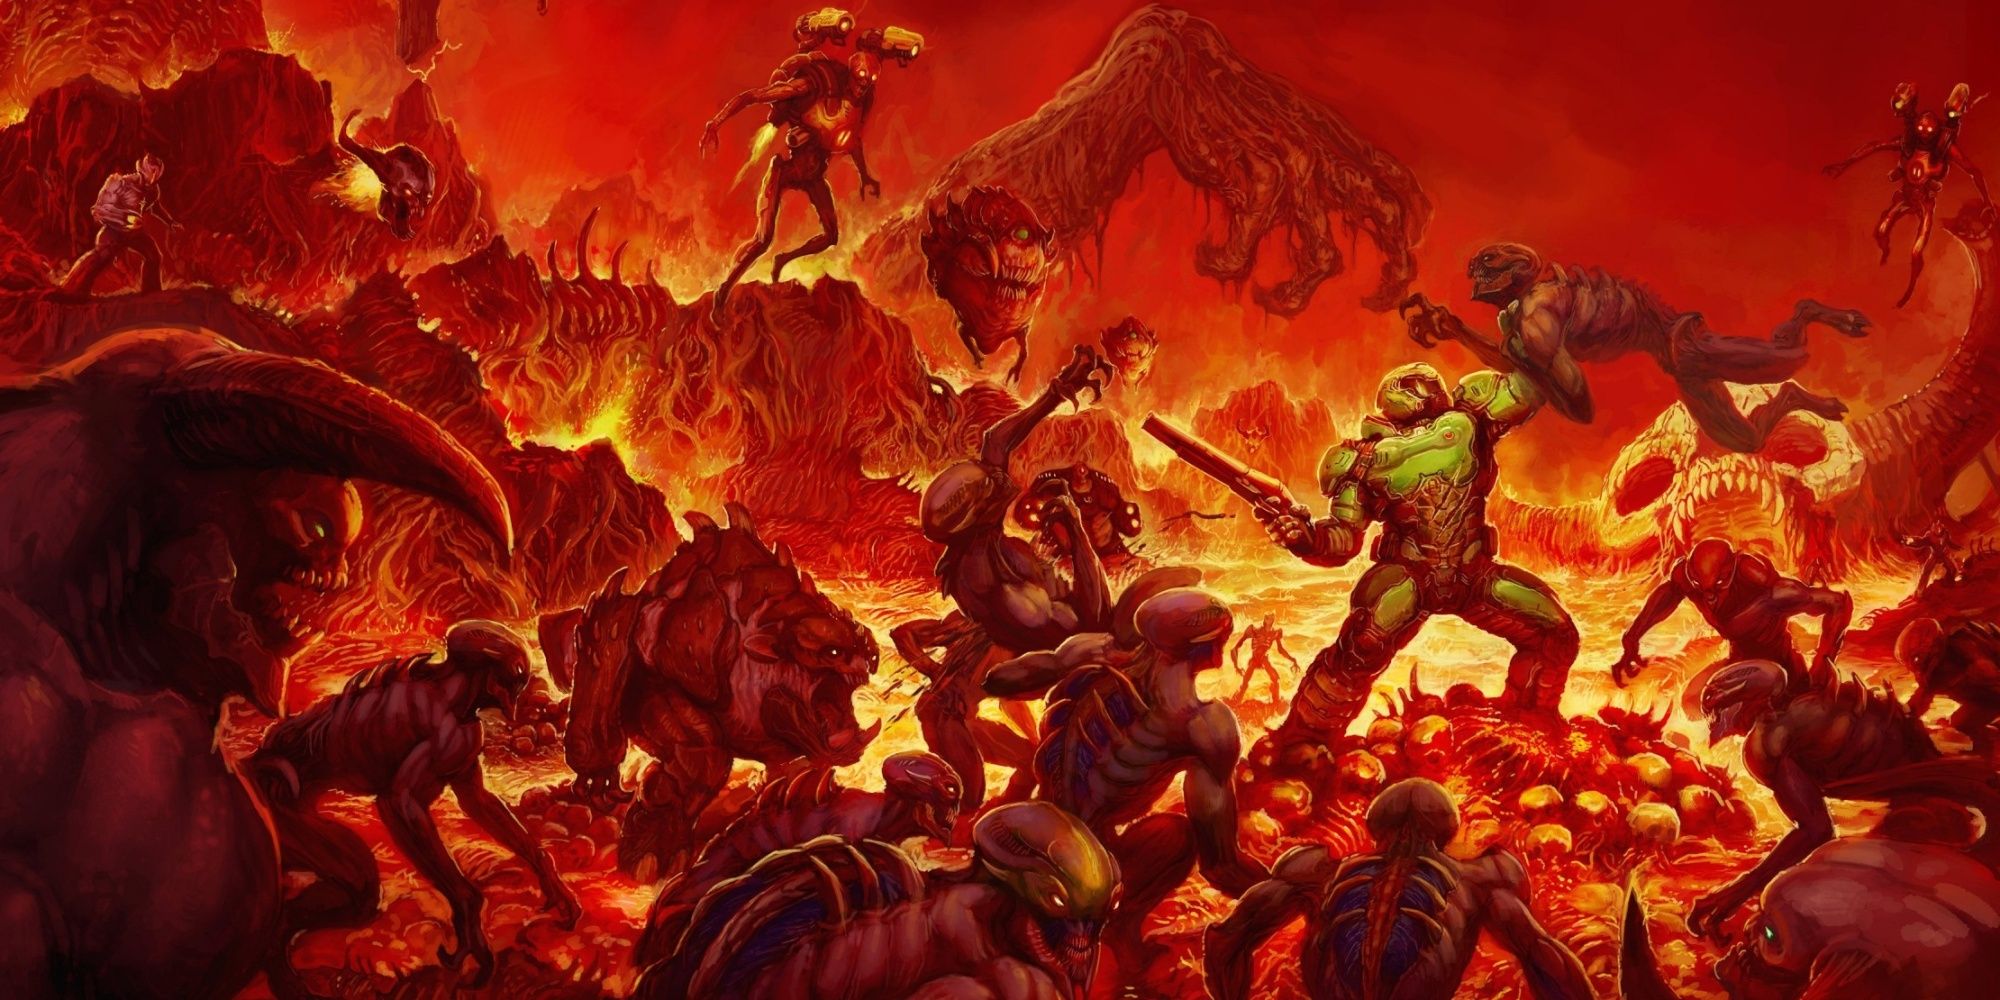 Doom: Doom Marine Battling The Forces Of Hell